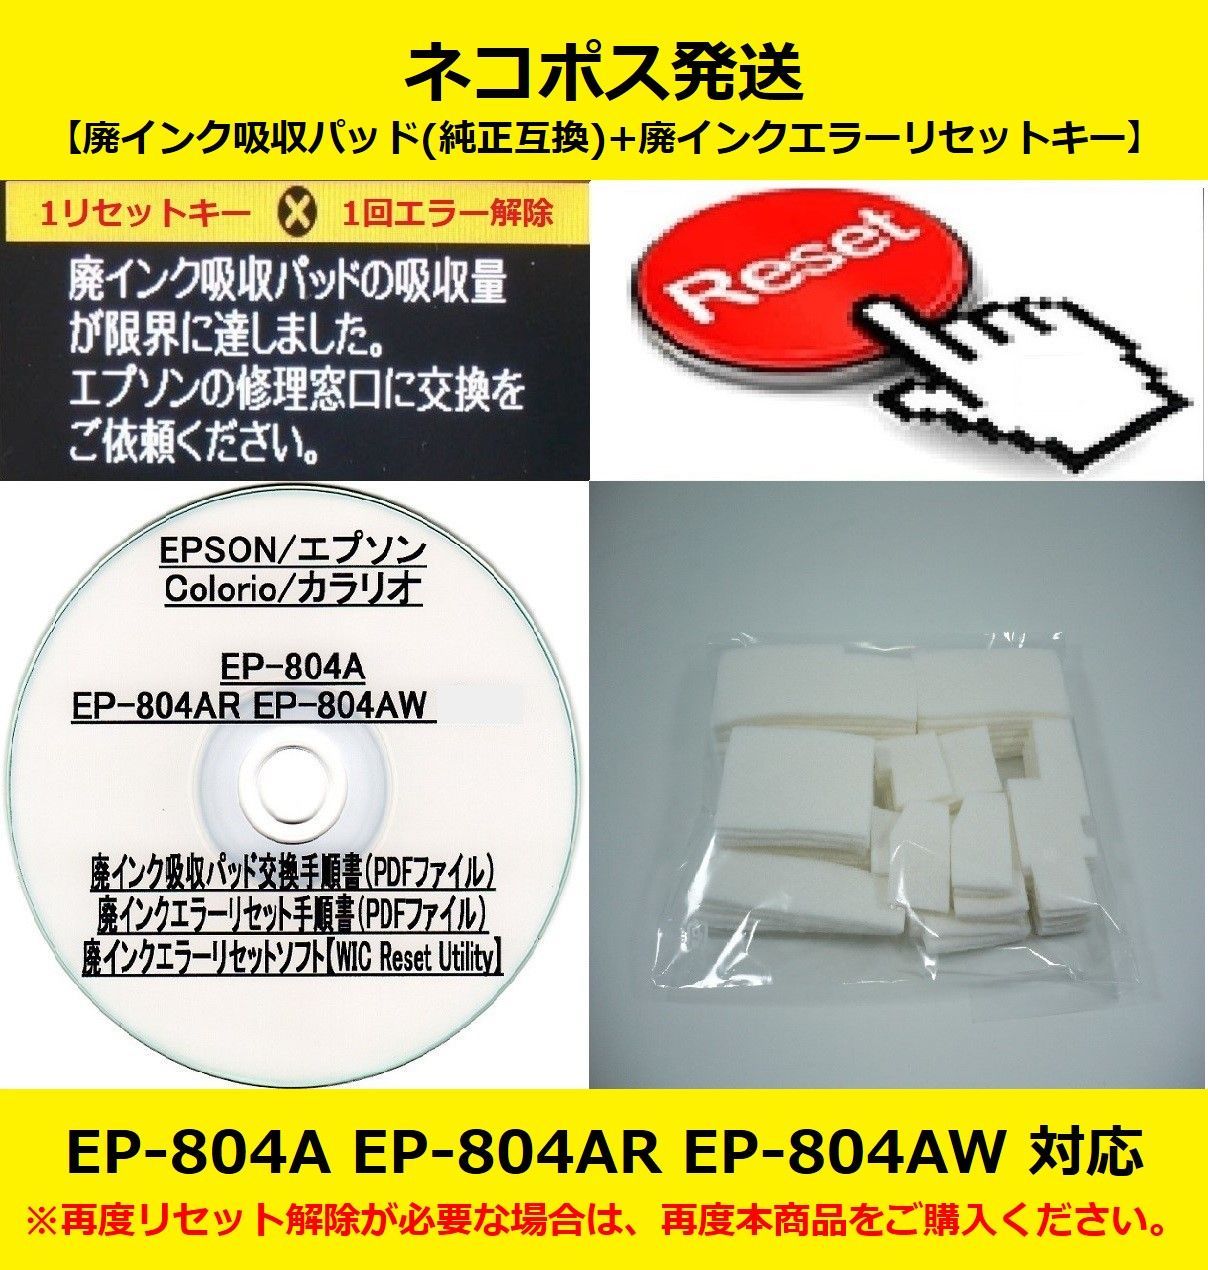 EP-804A EP-804AR EP-804AW EPSON/エプソン ♪安心の日本製吸収材 